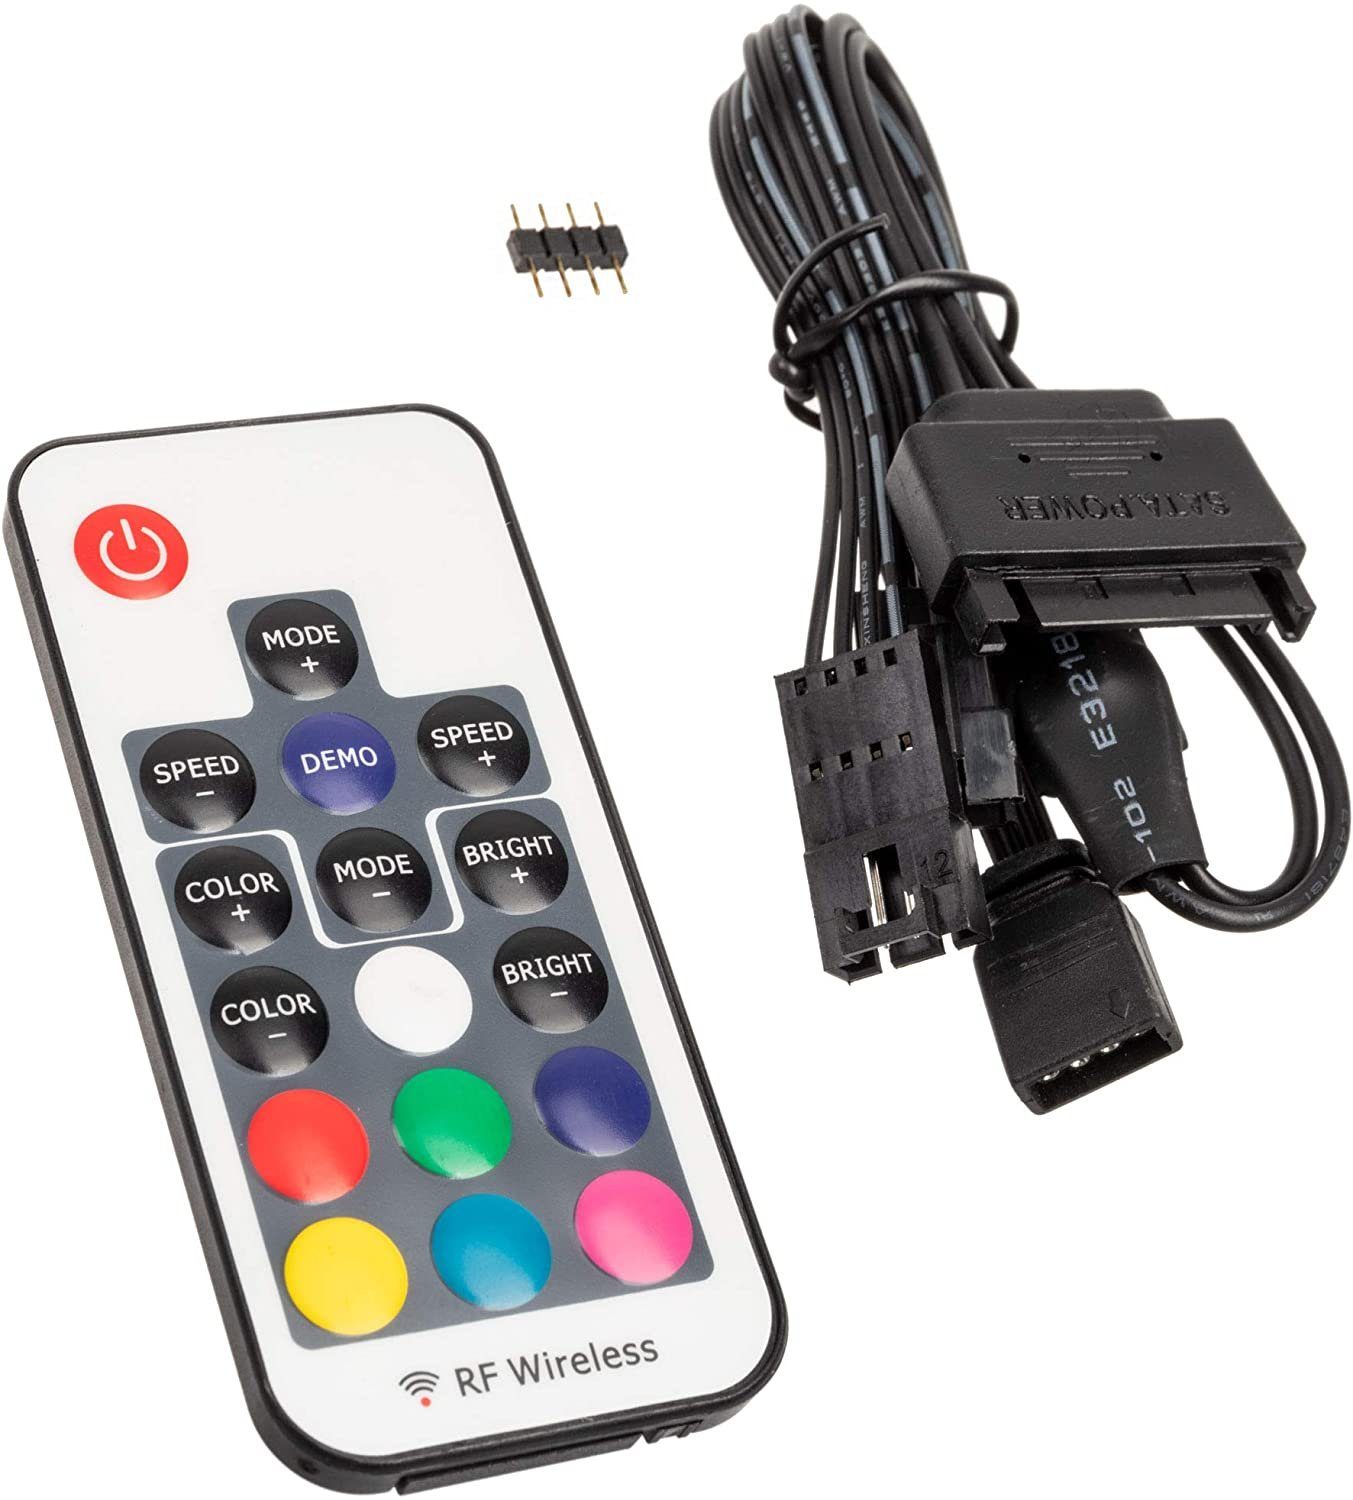 Kolink LED Stripe »Inspire L2 ARGB Controller«, 4-Pin, 12V, Gaming RGB  Controller SATA für digital adressierbare RGB-LEDs mit RF-Fernbedienung,  über 300 Farbeinstellungen, schwarz